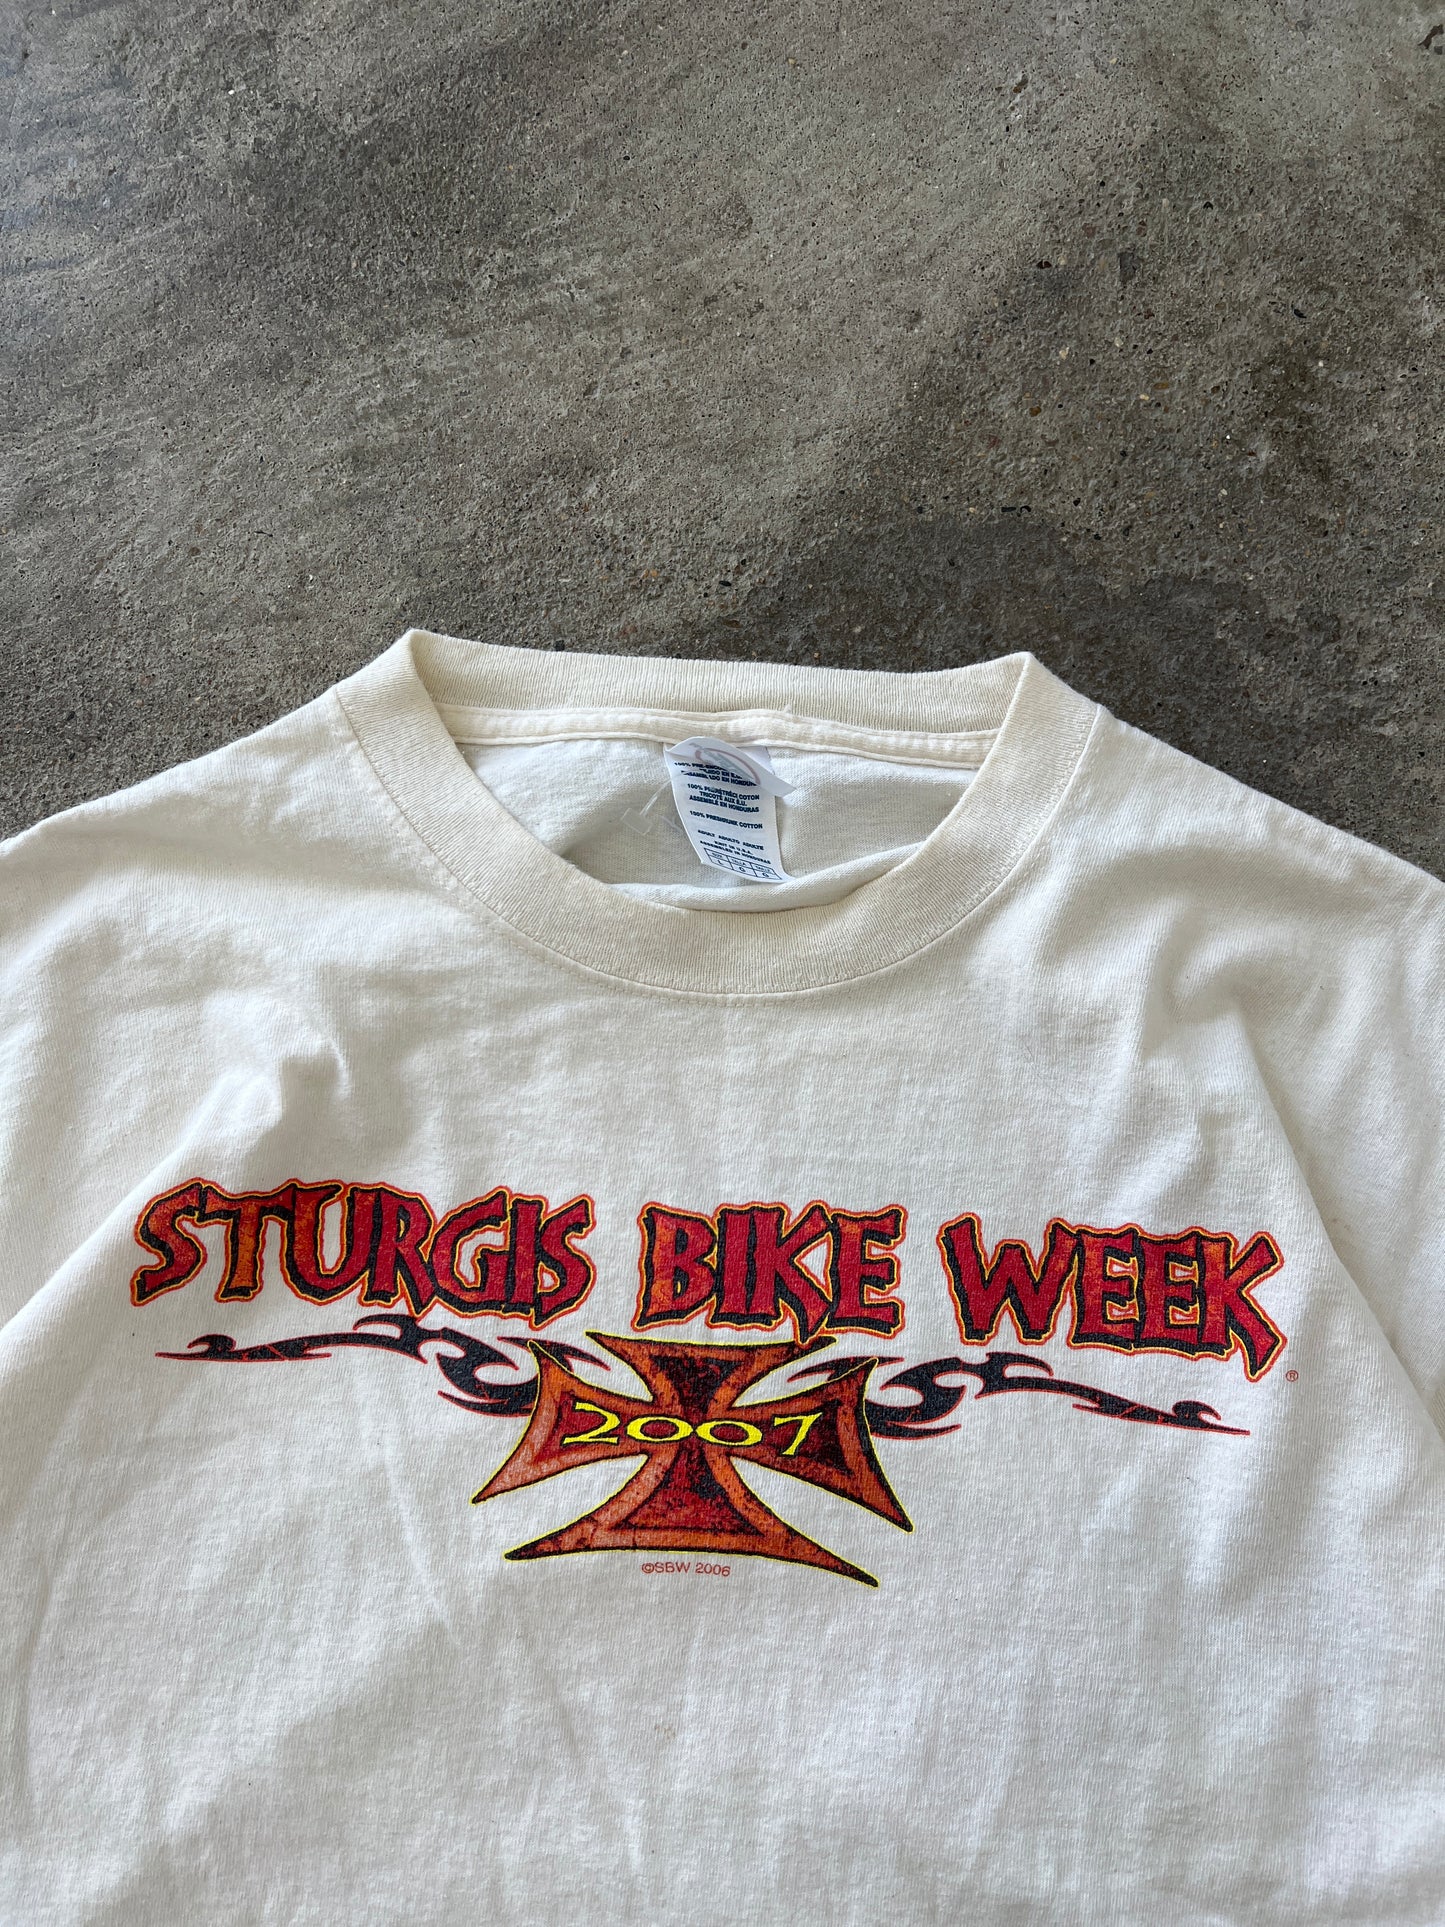 Vintage Sturgis Bike Week Shirt - L